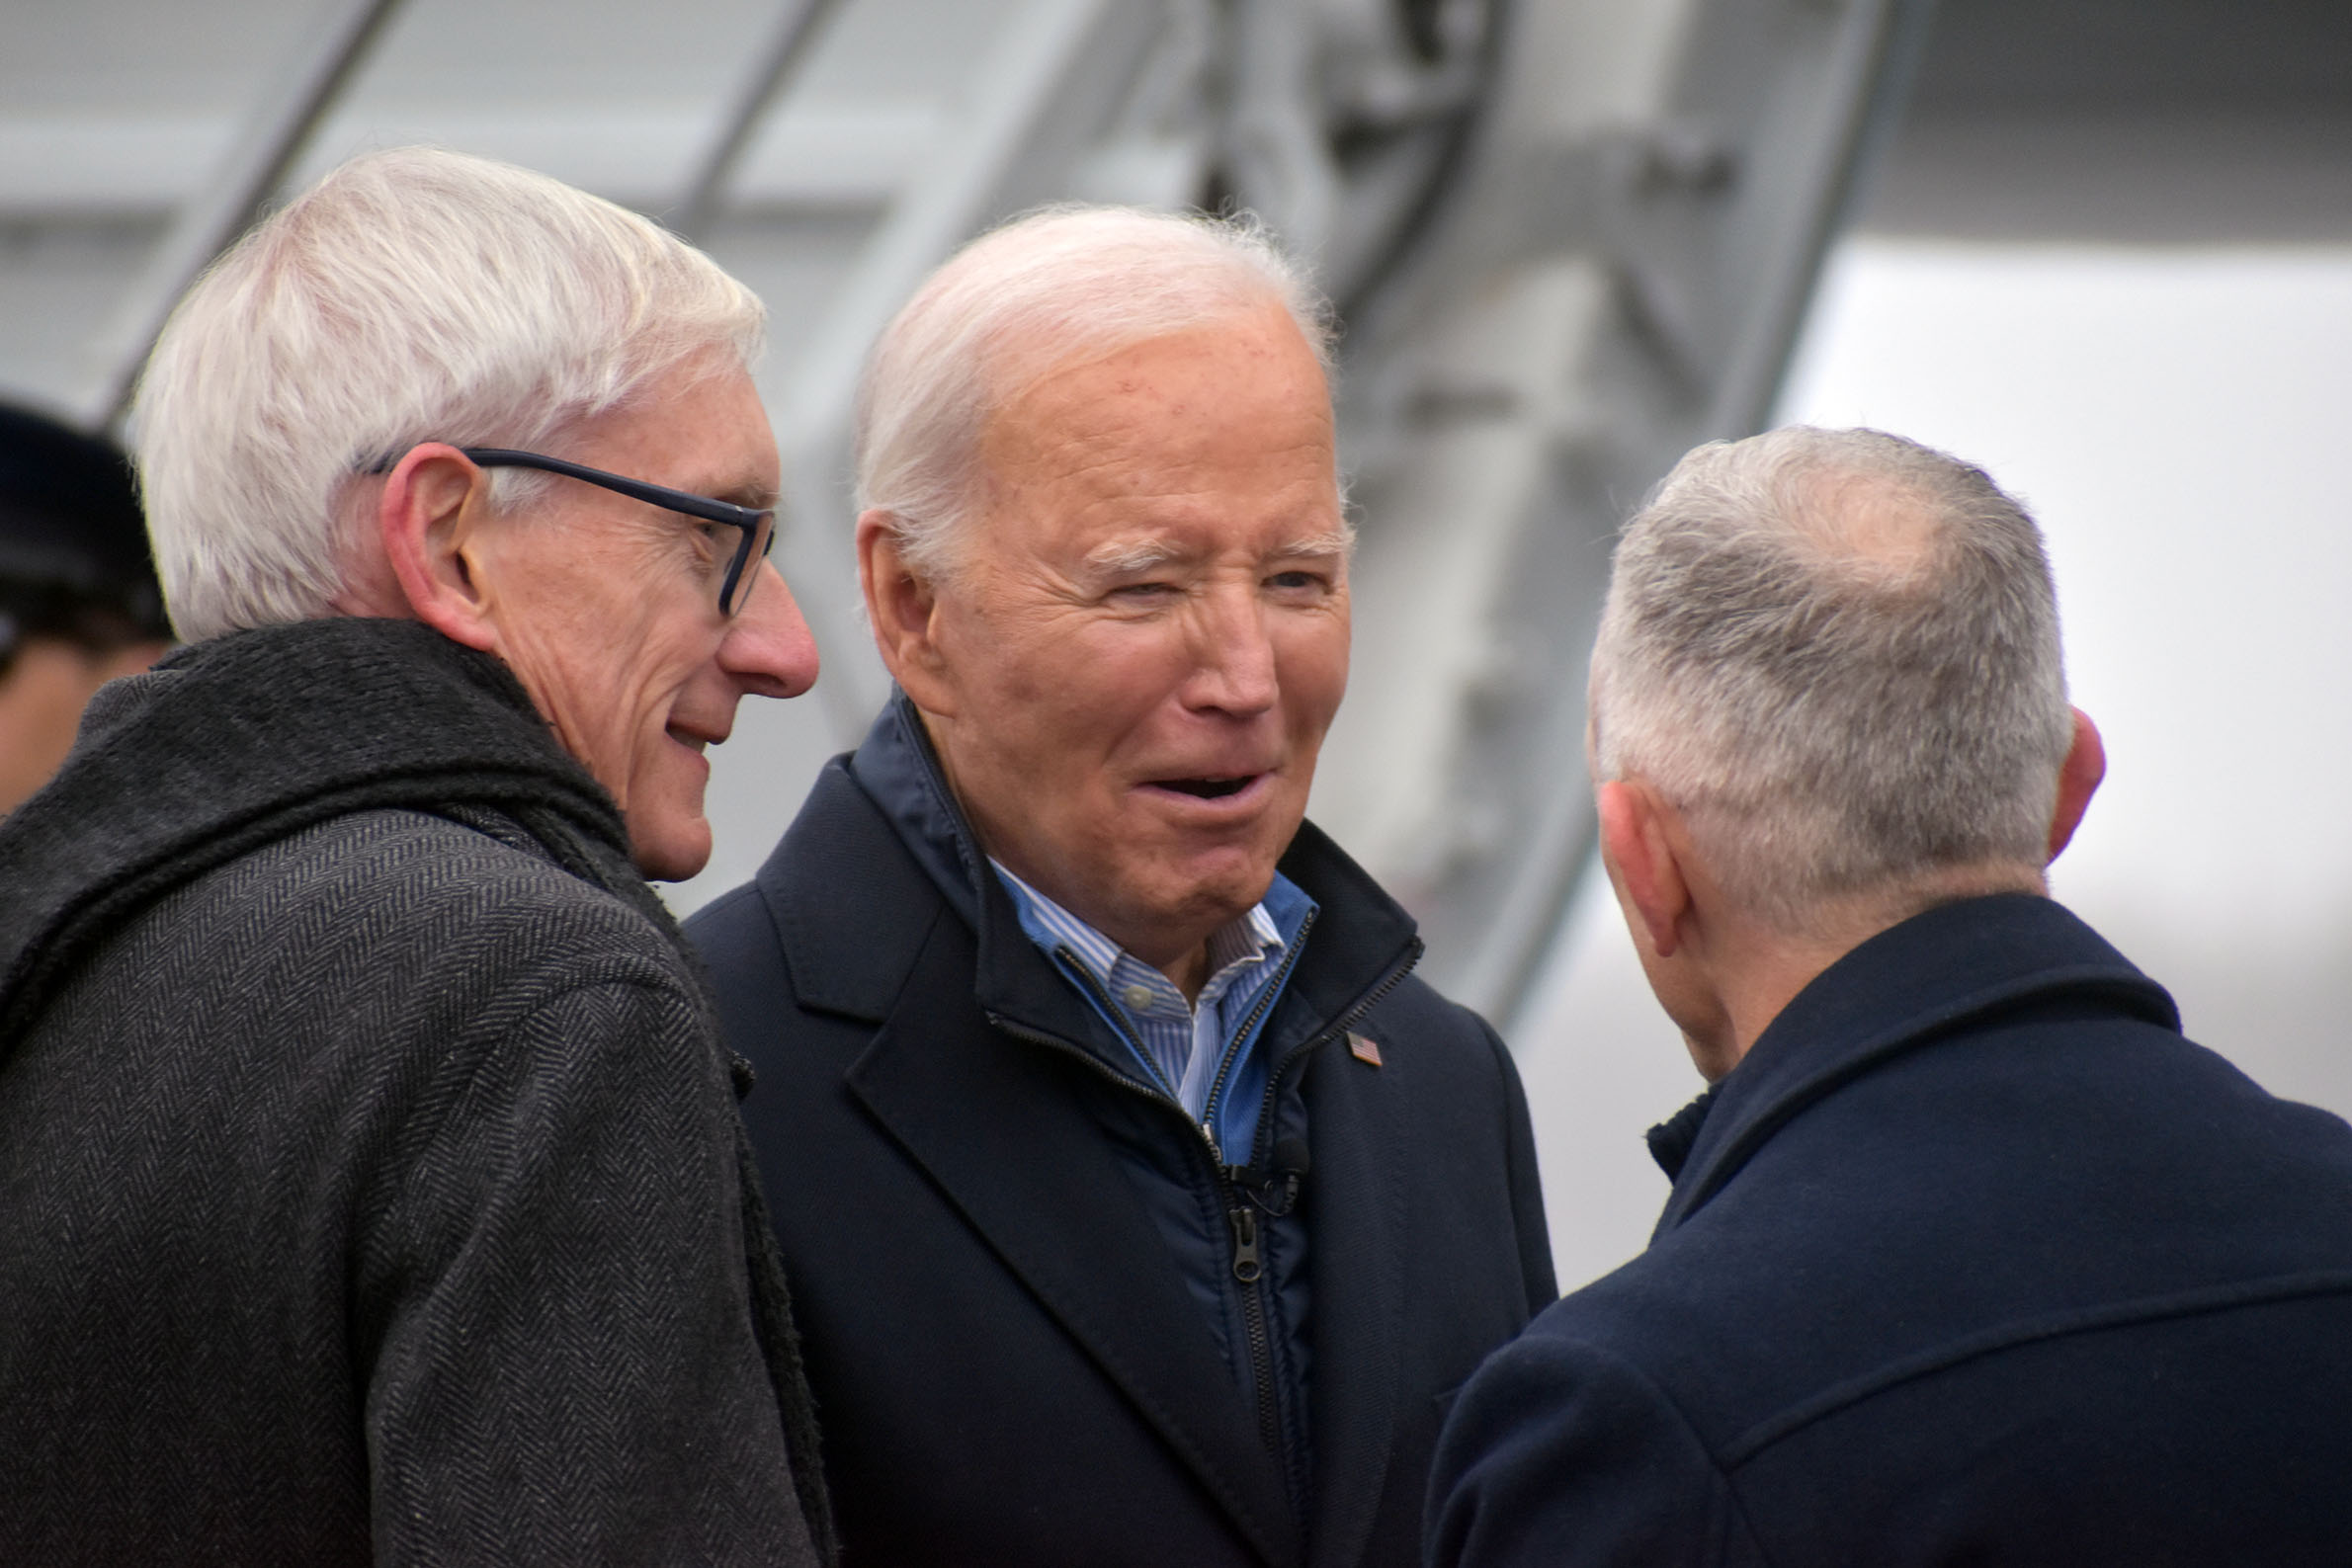 President Joe Biden greets Minnesota Gov. Tim Walz and Wisconsin Gov. Tim Evers.